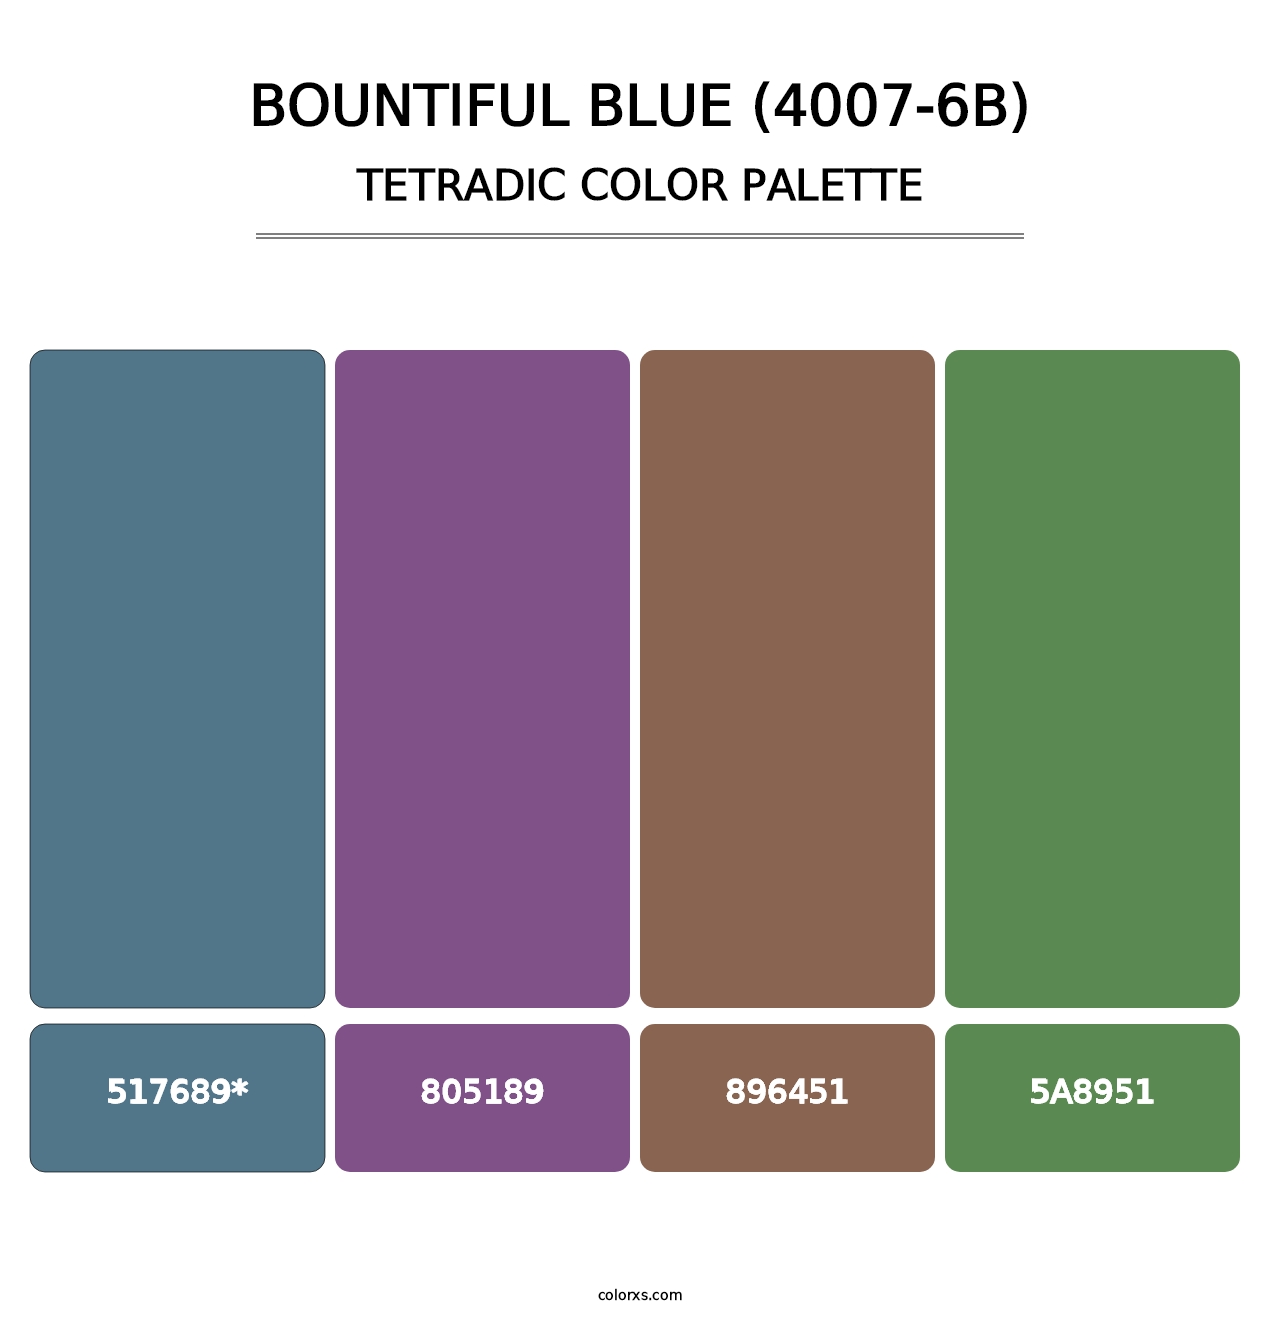 Bountiful Blue (4007-6B) - Tetradic Color Palette